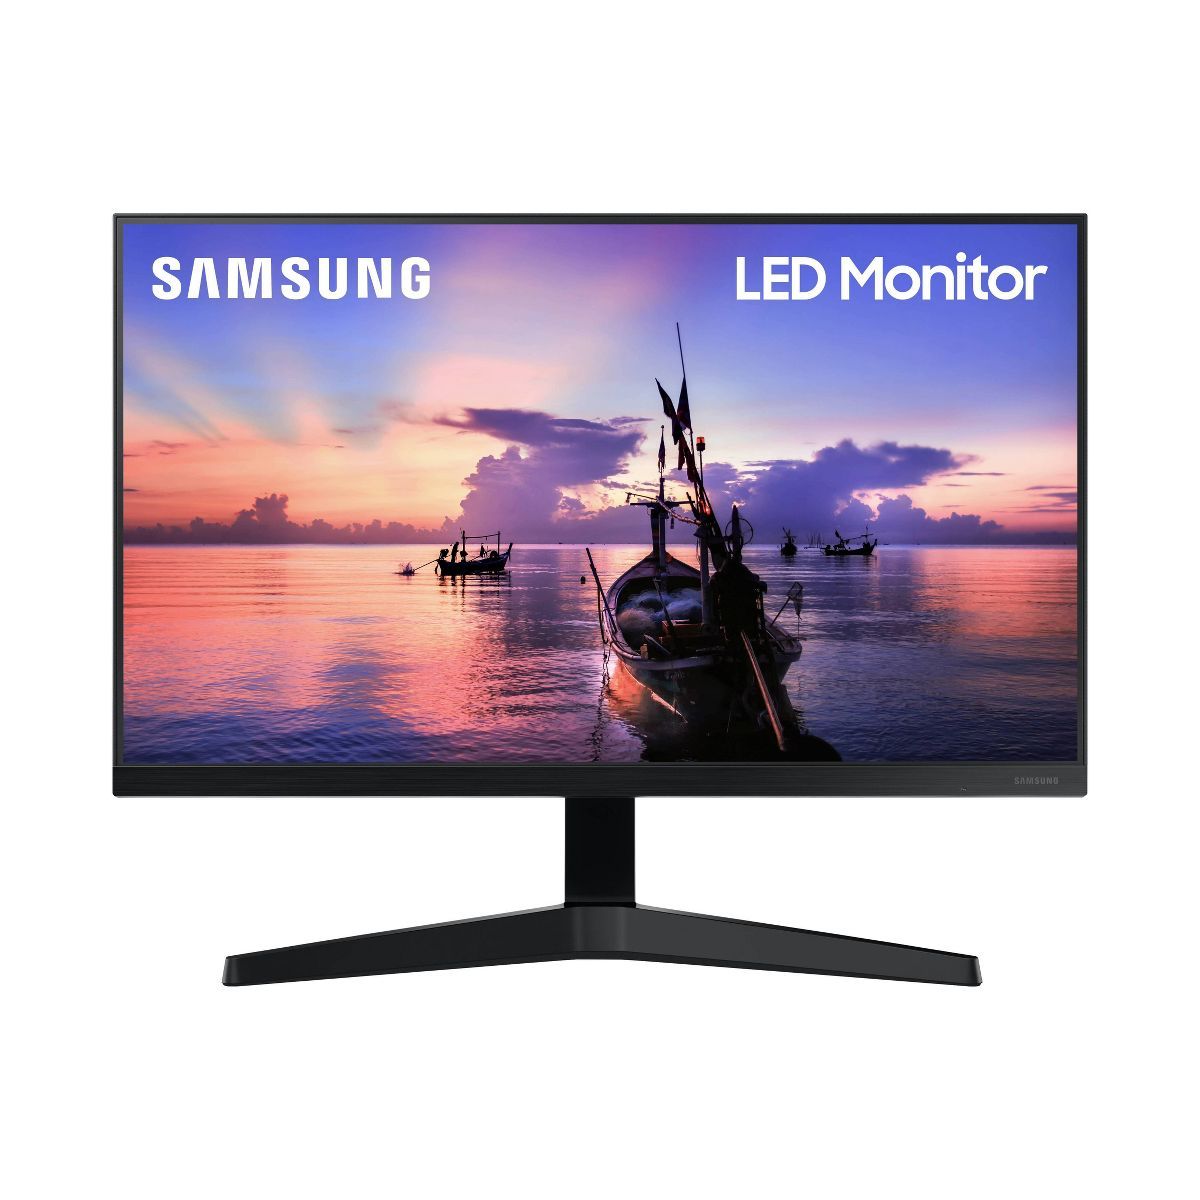 Samsung 27" FHD IPS Computer Monitor, AMD FreeSync, HDMI & VGA (T350 Series) - Dark Blue/Gray | Target